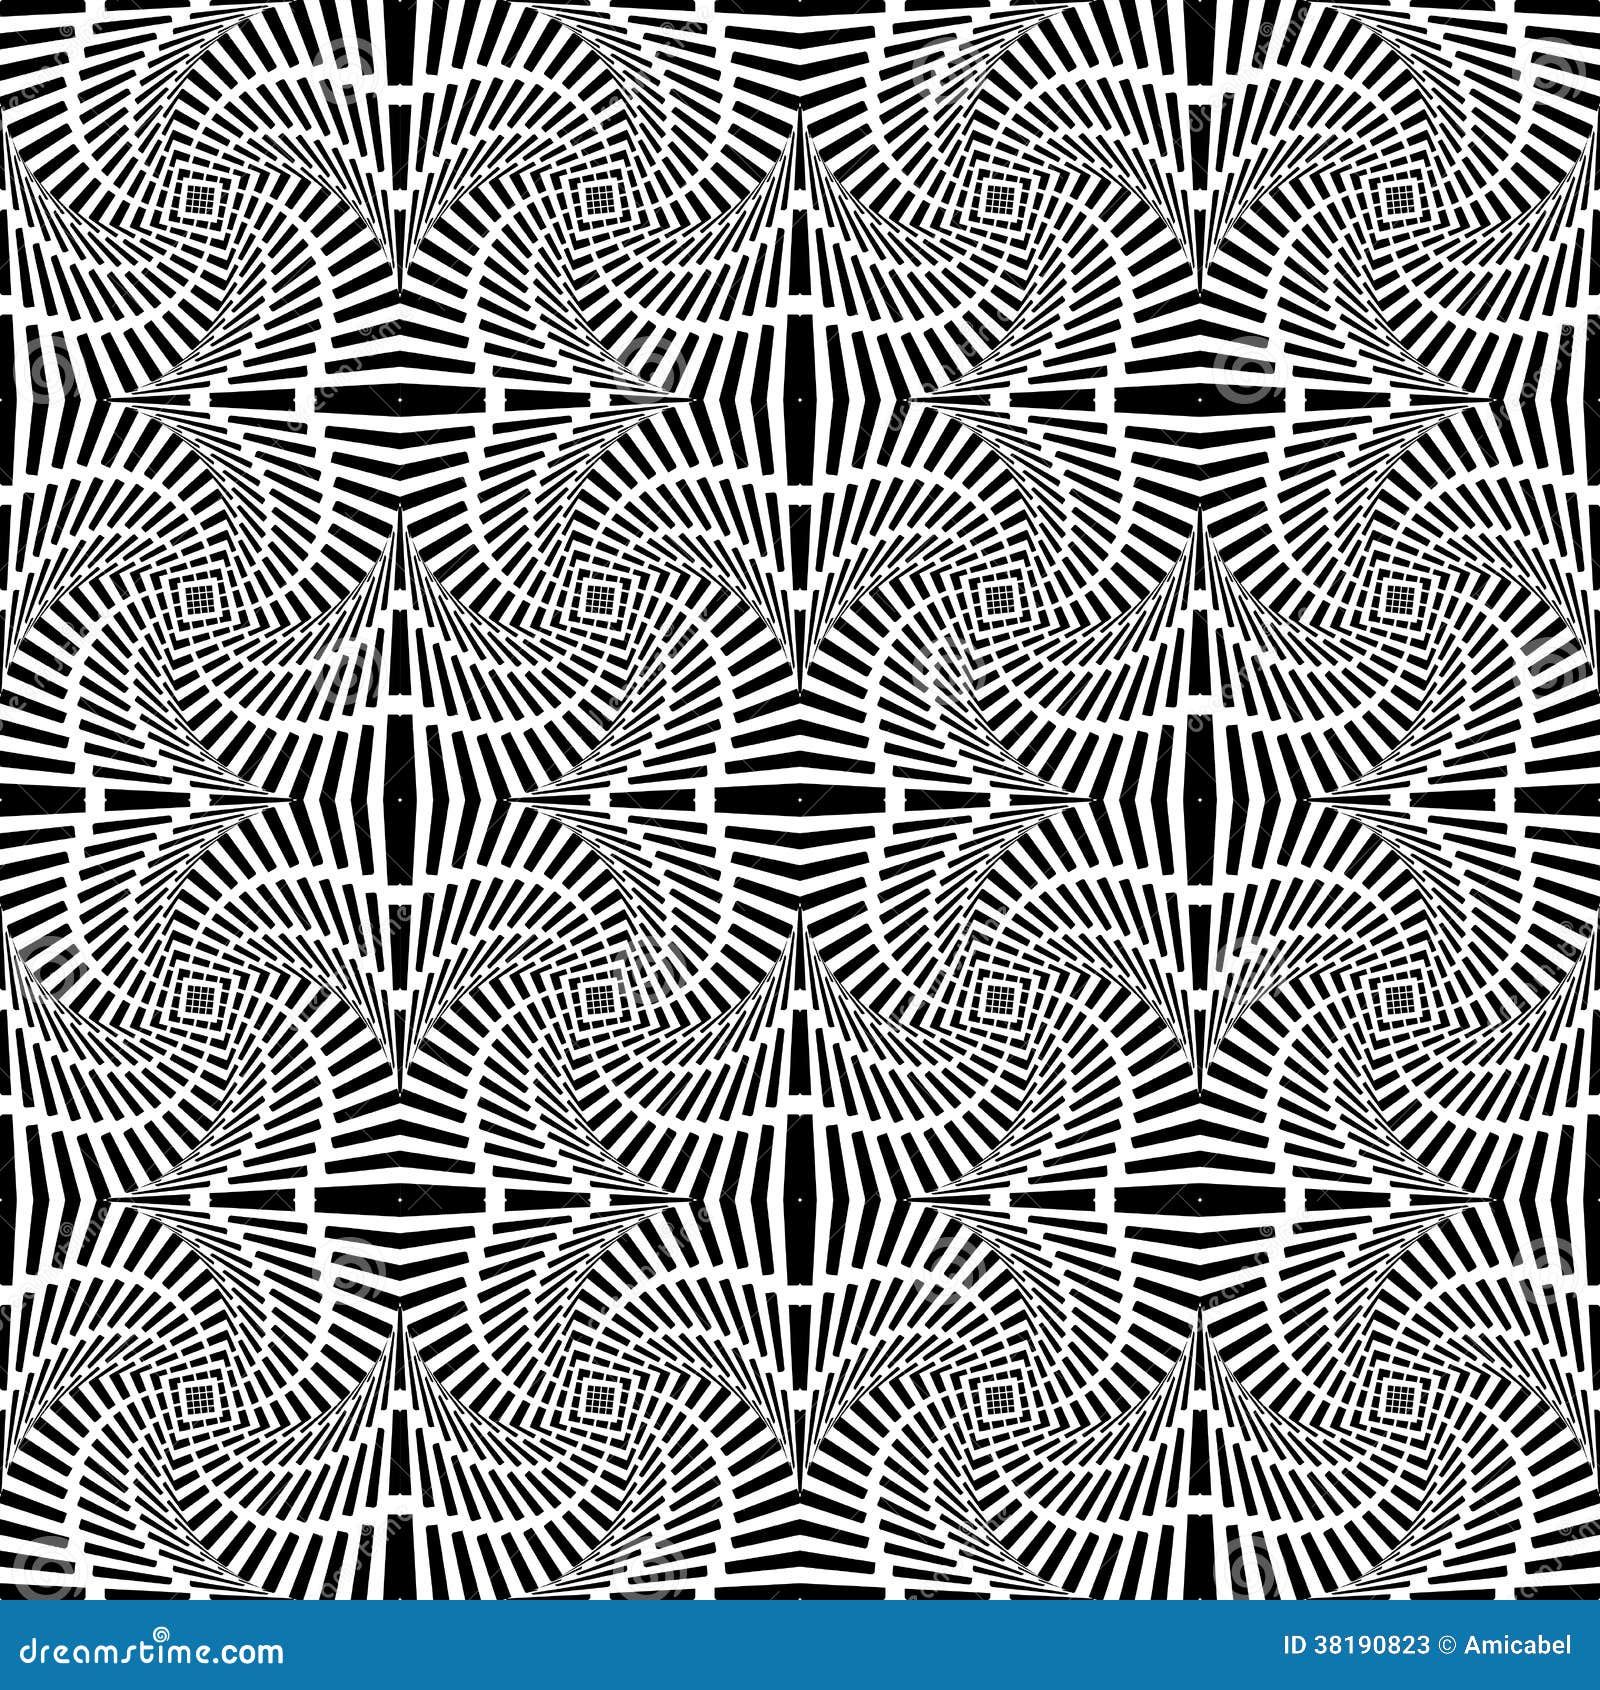 Design Seamless Uncolored Swirl Movement Pattern. Stock Vector ...